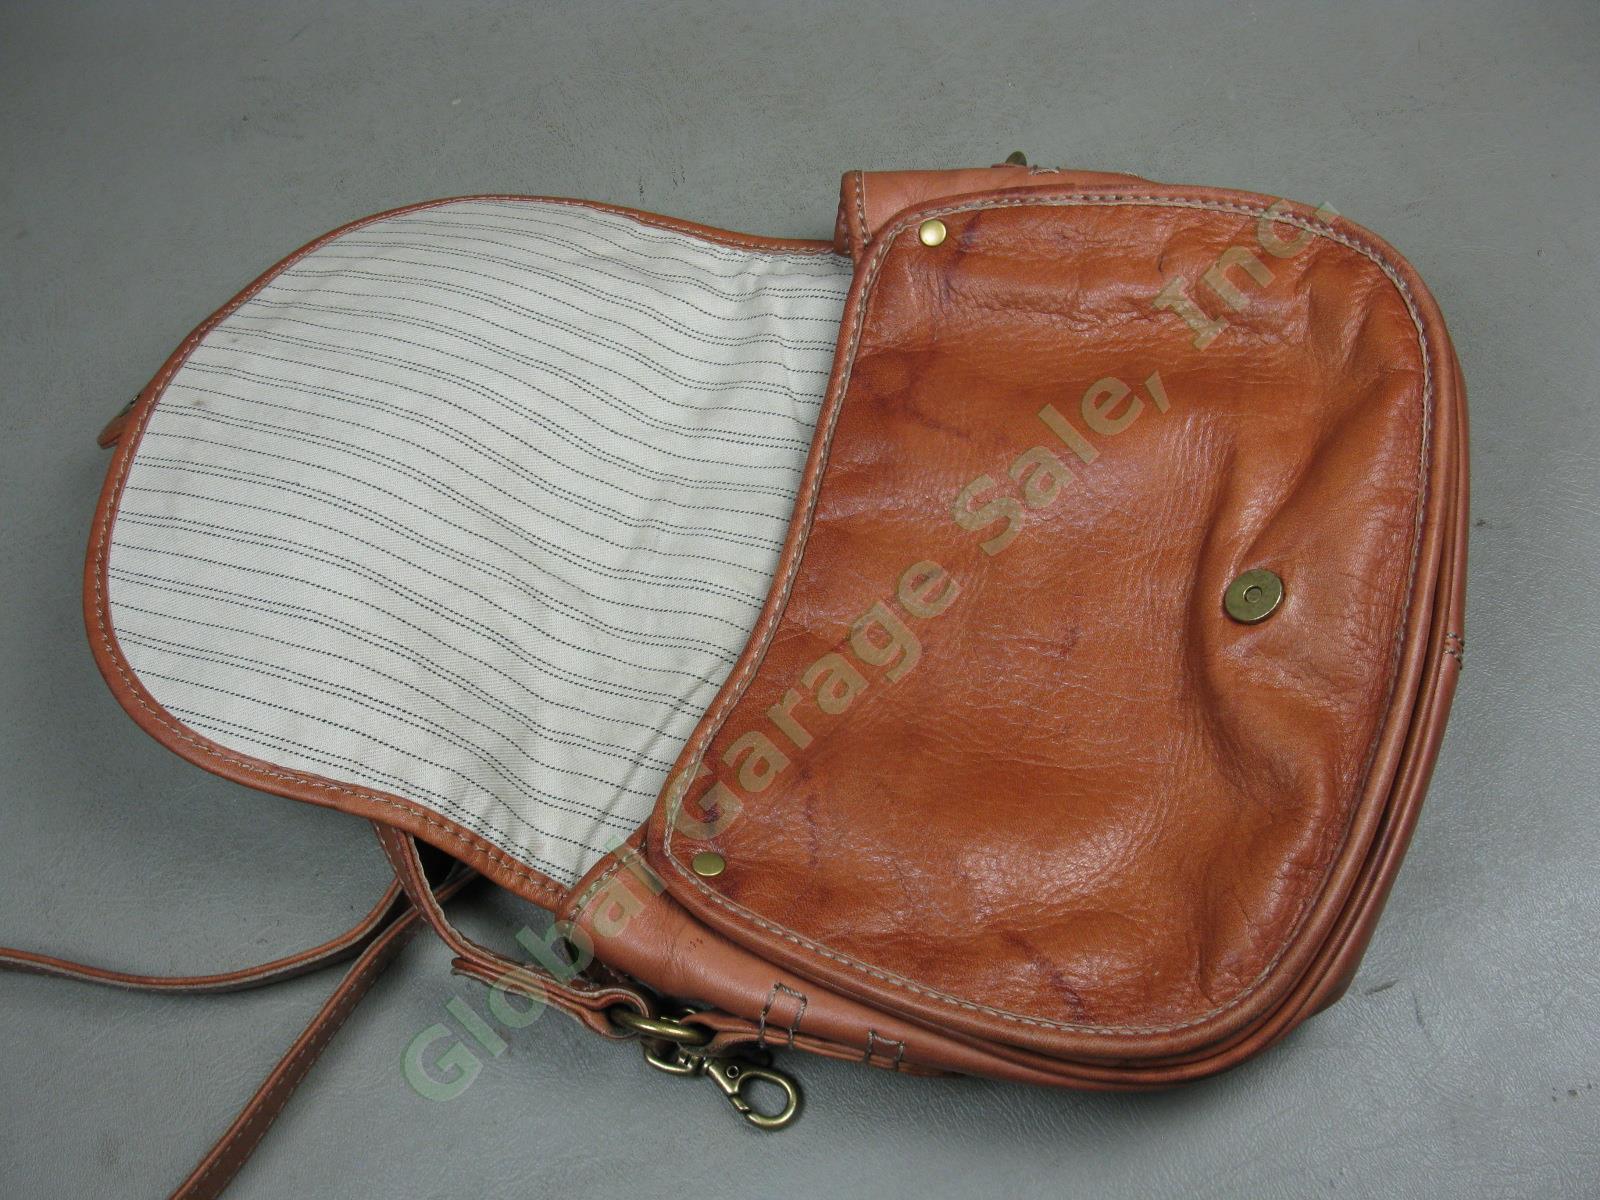 Frye Campus Saddle Cross Body Leather Handbag Clutch DB891 $298 Retail NORESERVE 5